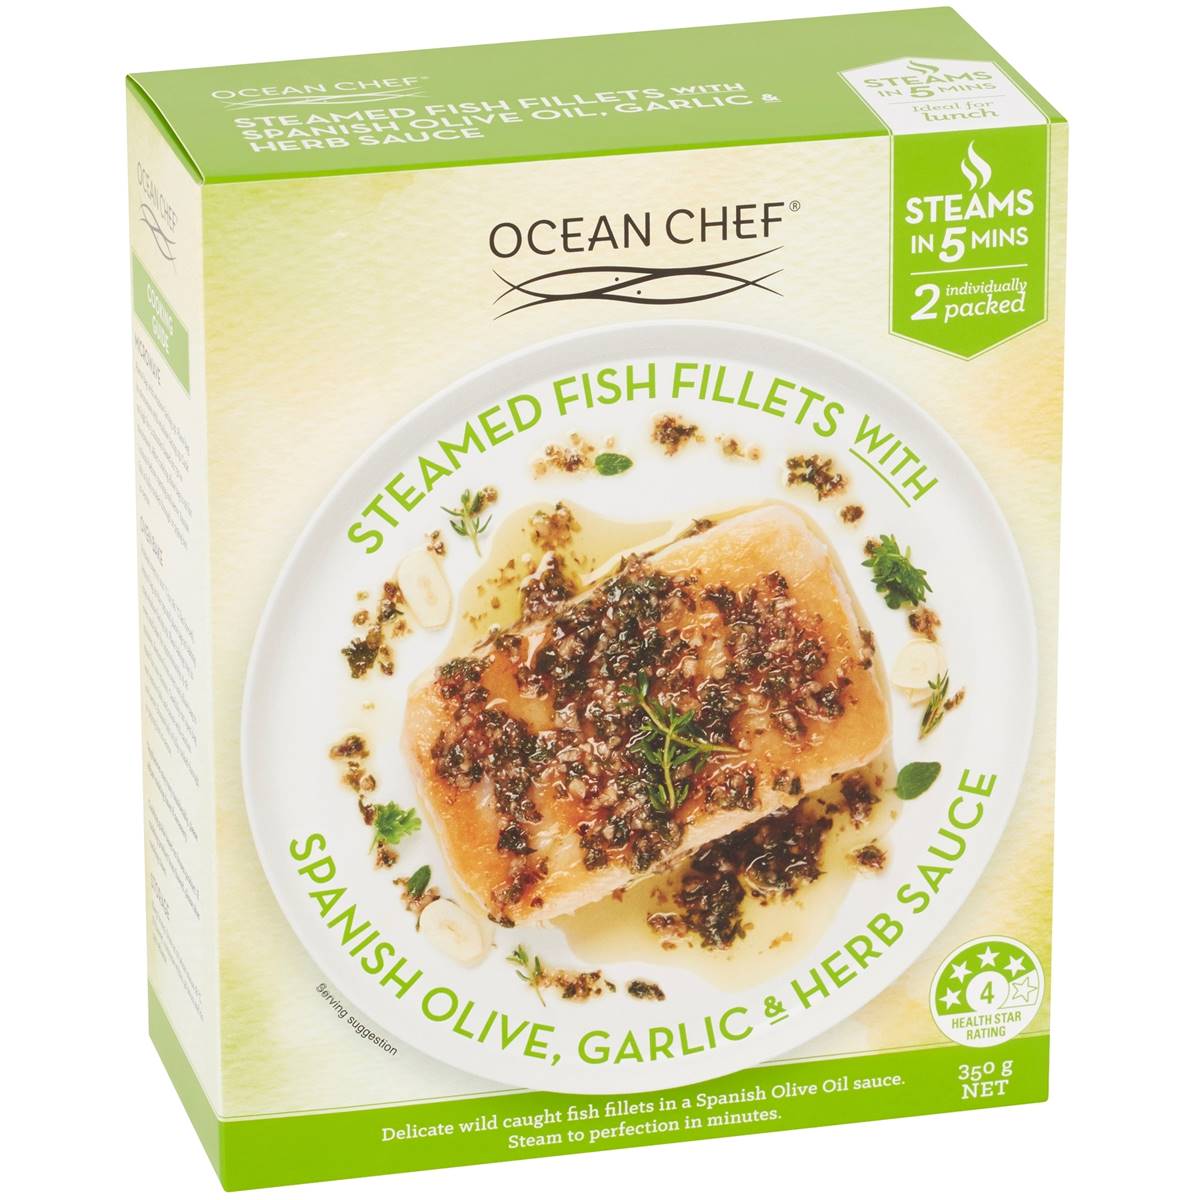 Ocean Chef Steamed Fish Fillets Olive Oil Garlic & Herbs